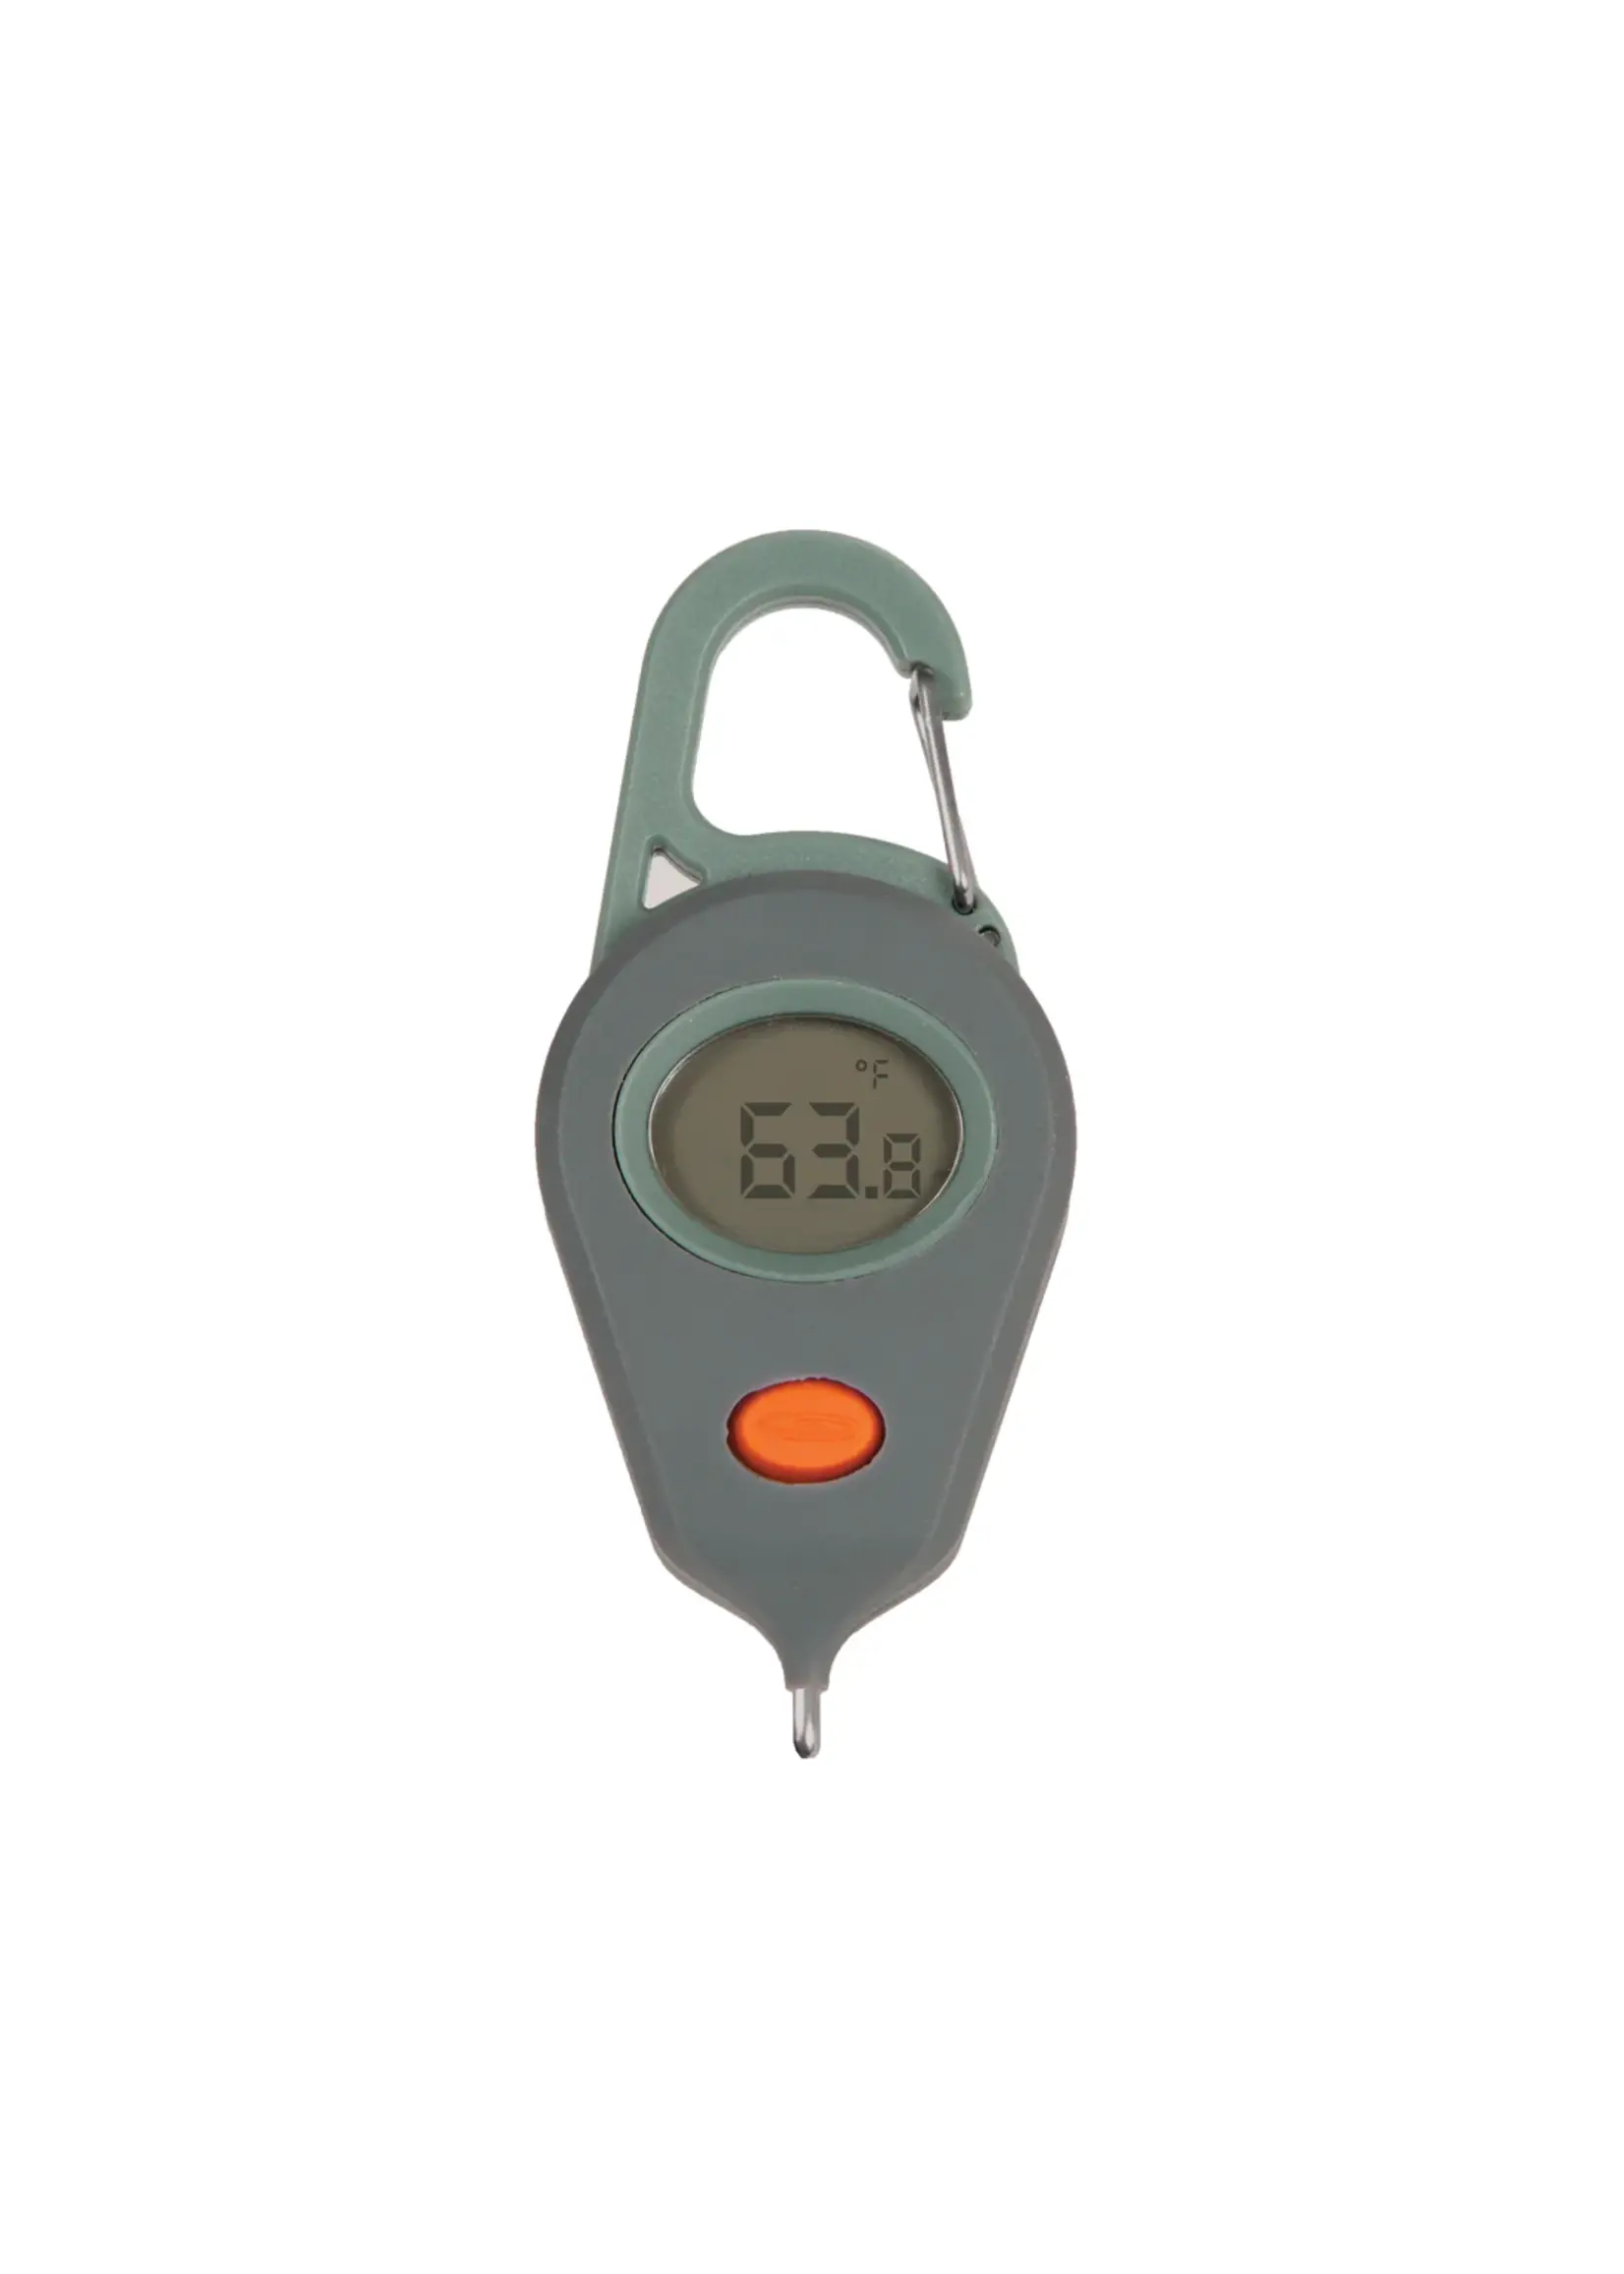 Fishpond Fishpond Waterproof Riverkeeper Digital Thermometer